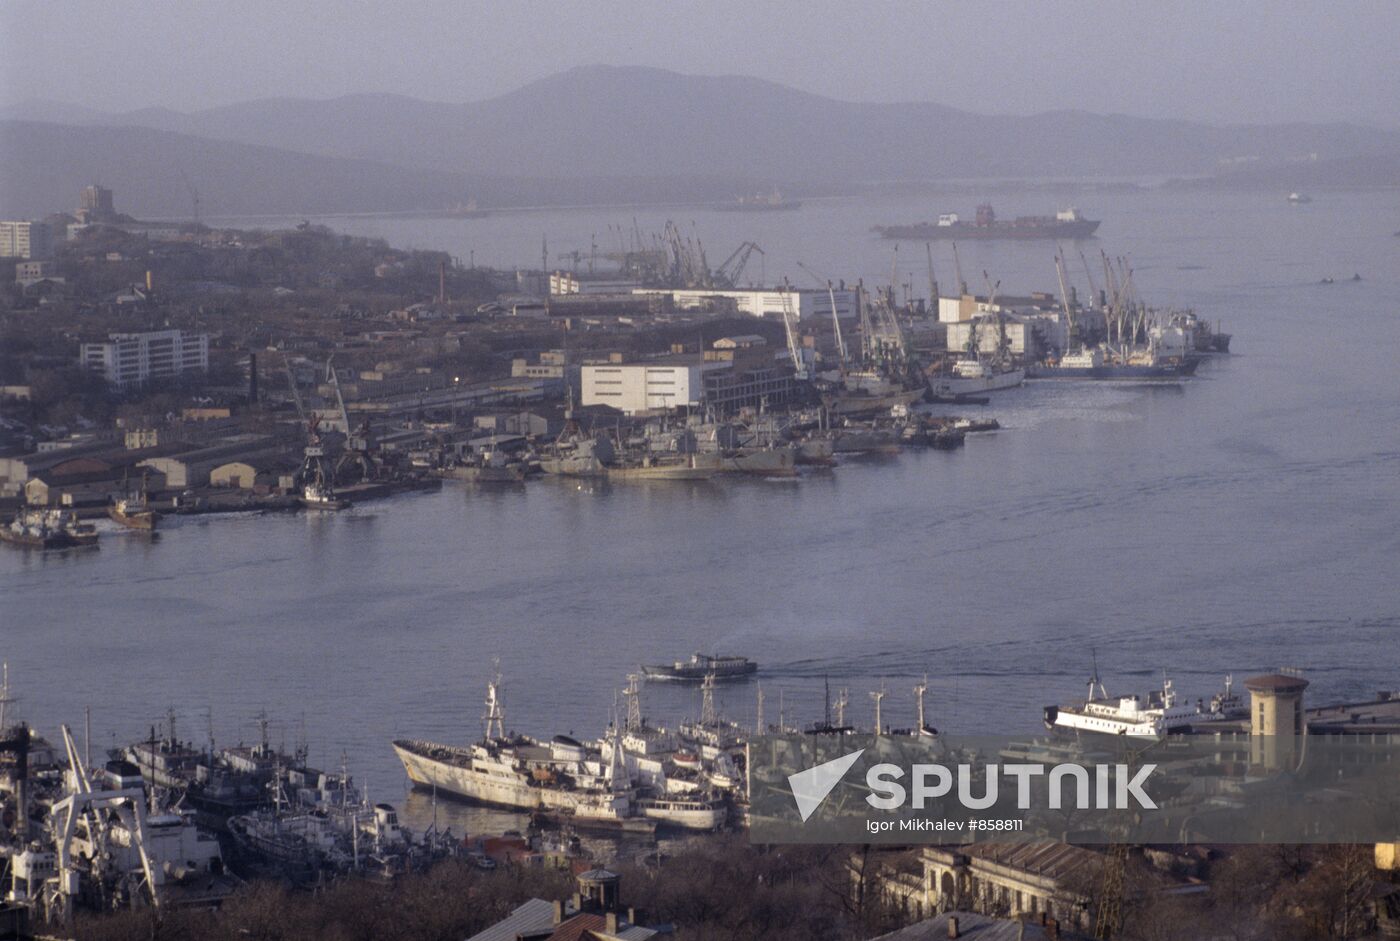 Vladivostok, city and port in Russia’s Far East